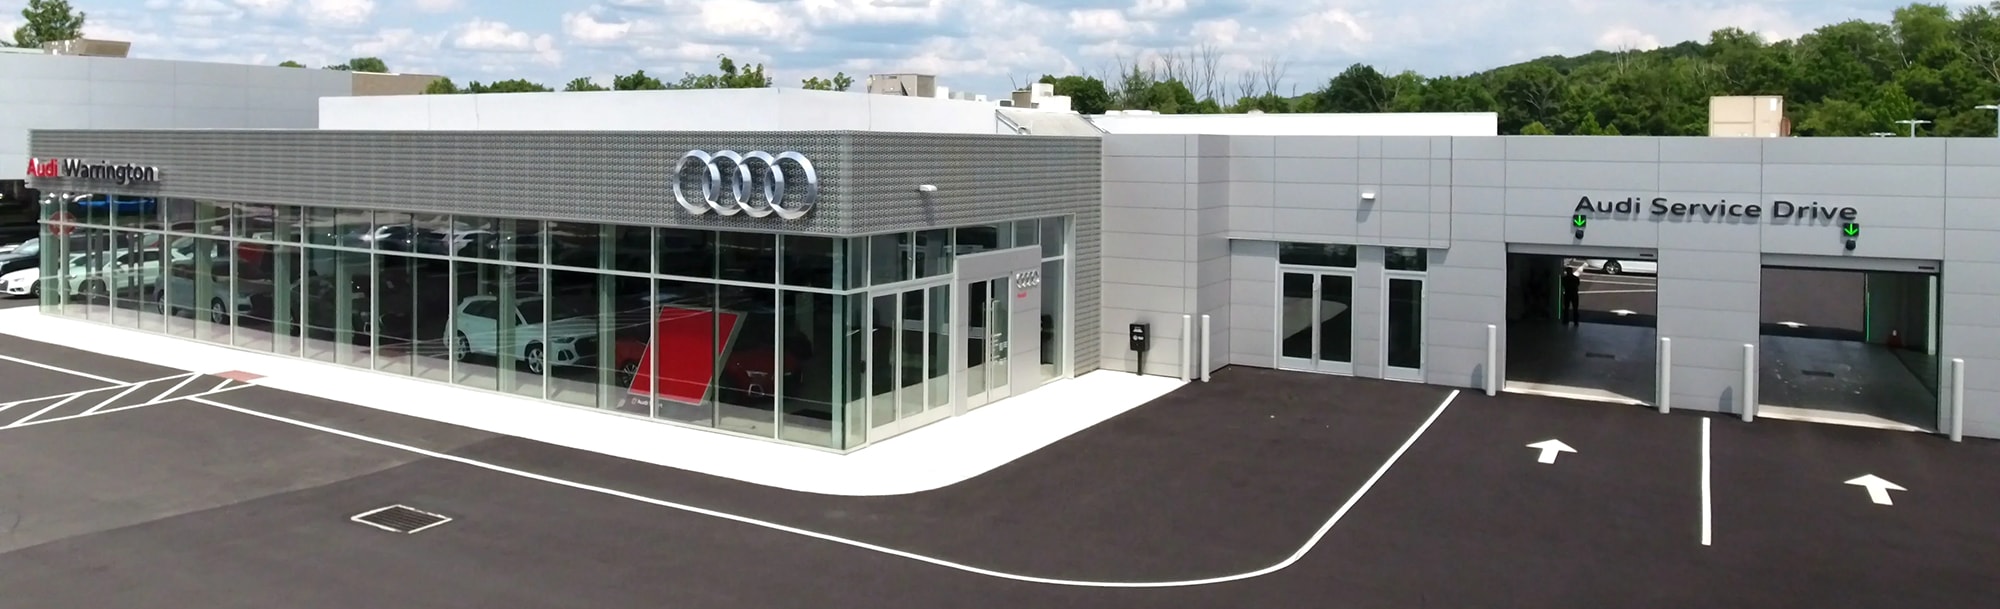 Exterior of Audi Warrington dealership.